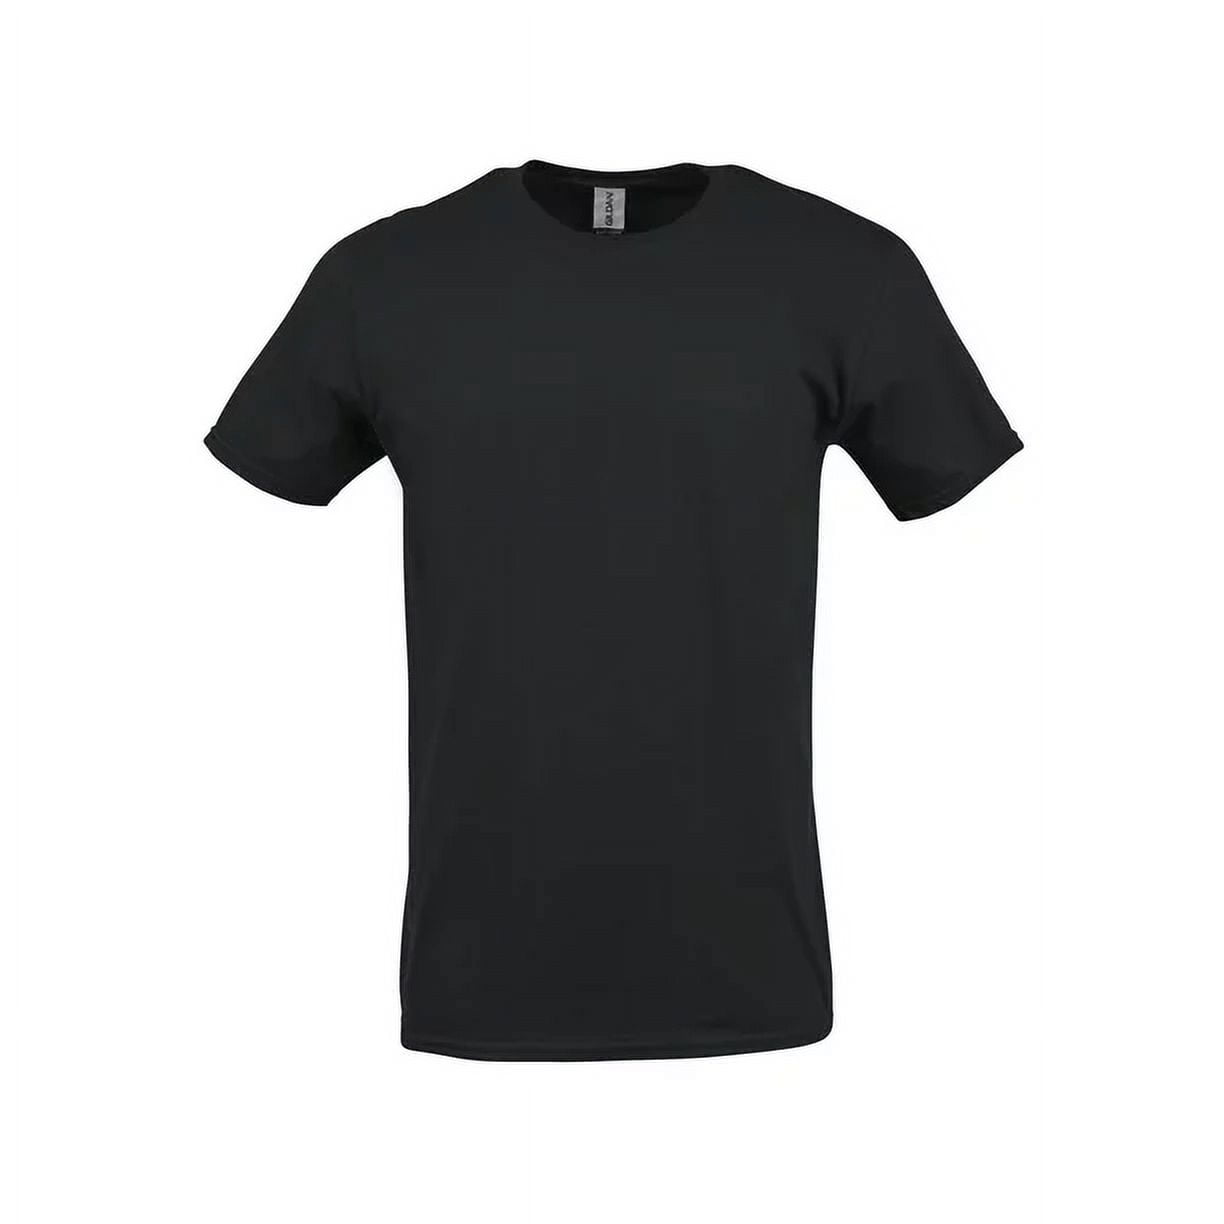 Gildan Adult Short Sleeve Crew T-Shirt for Crafting - Black, Size ...